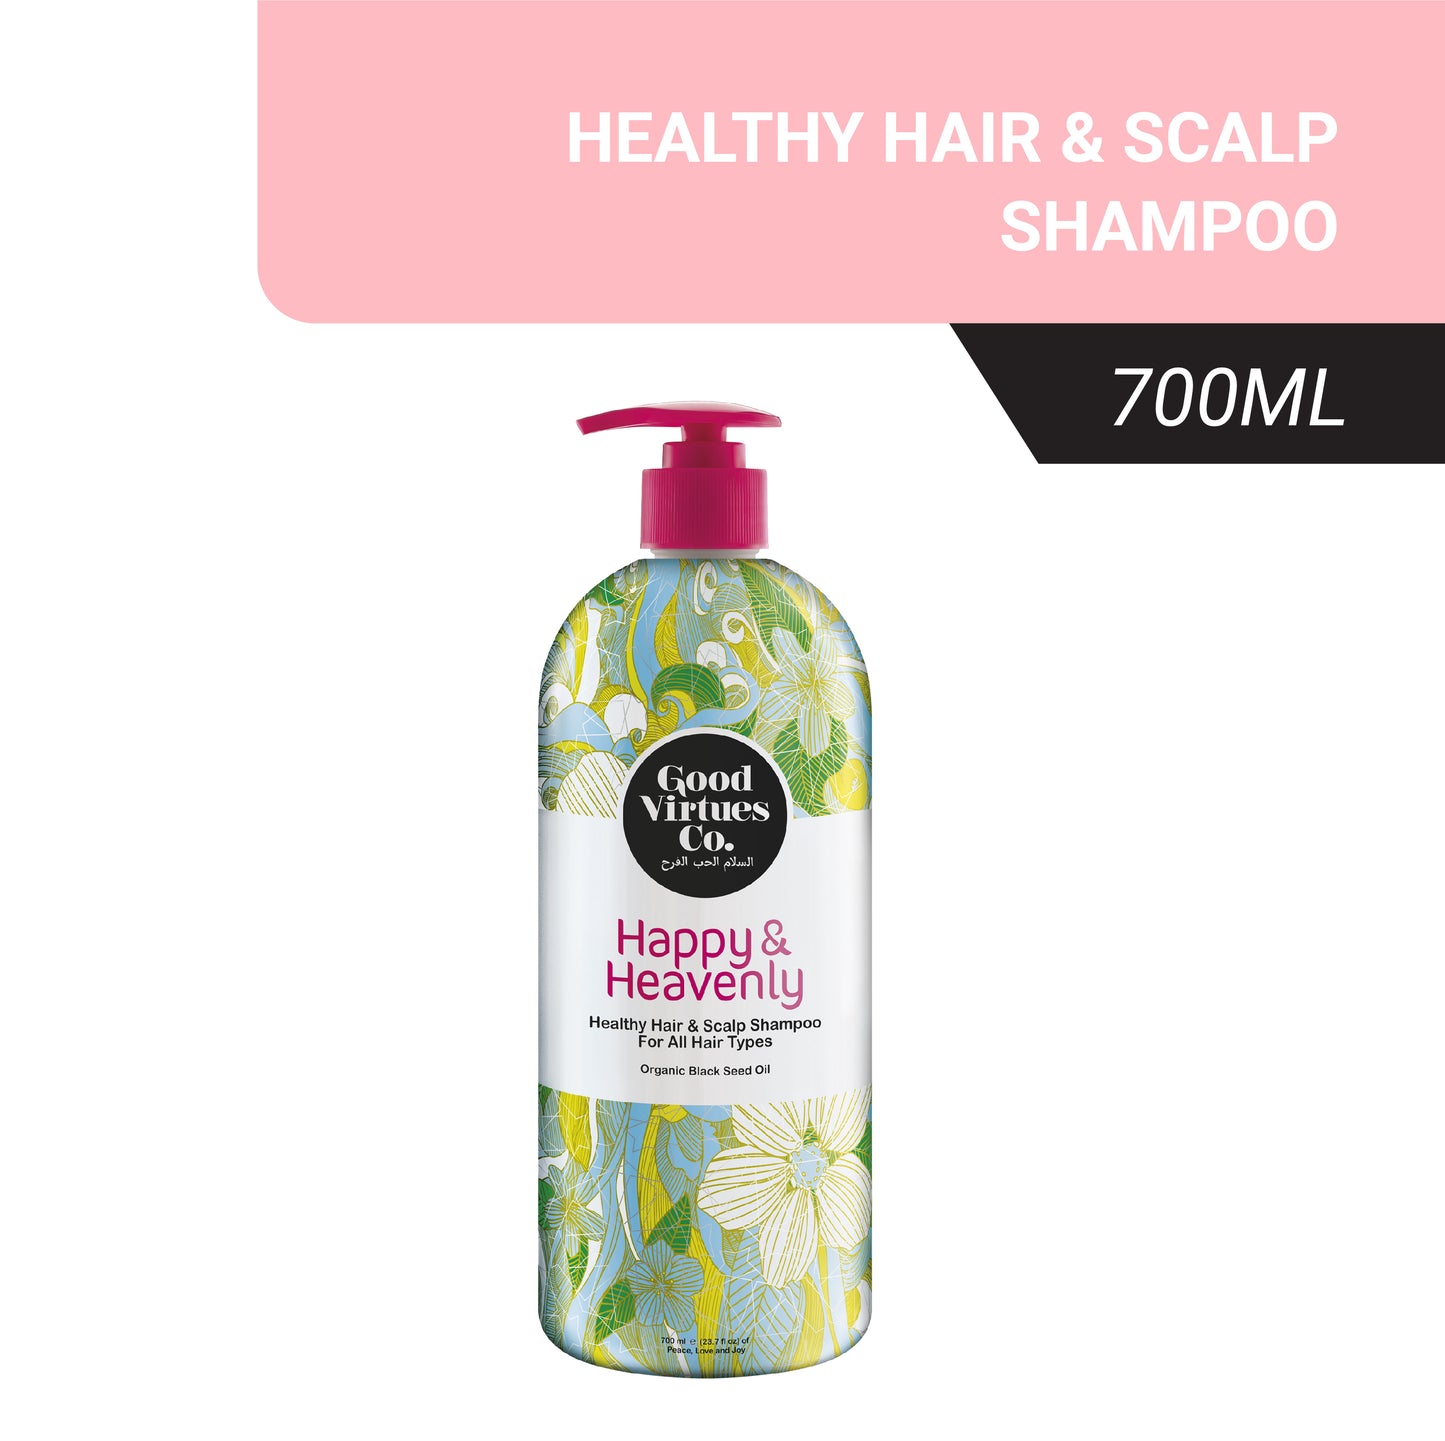 Happy & Heavenly Healthy Shampoo for All Hair Types